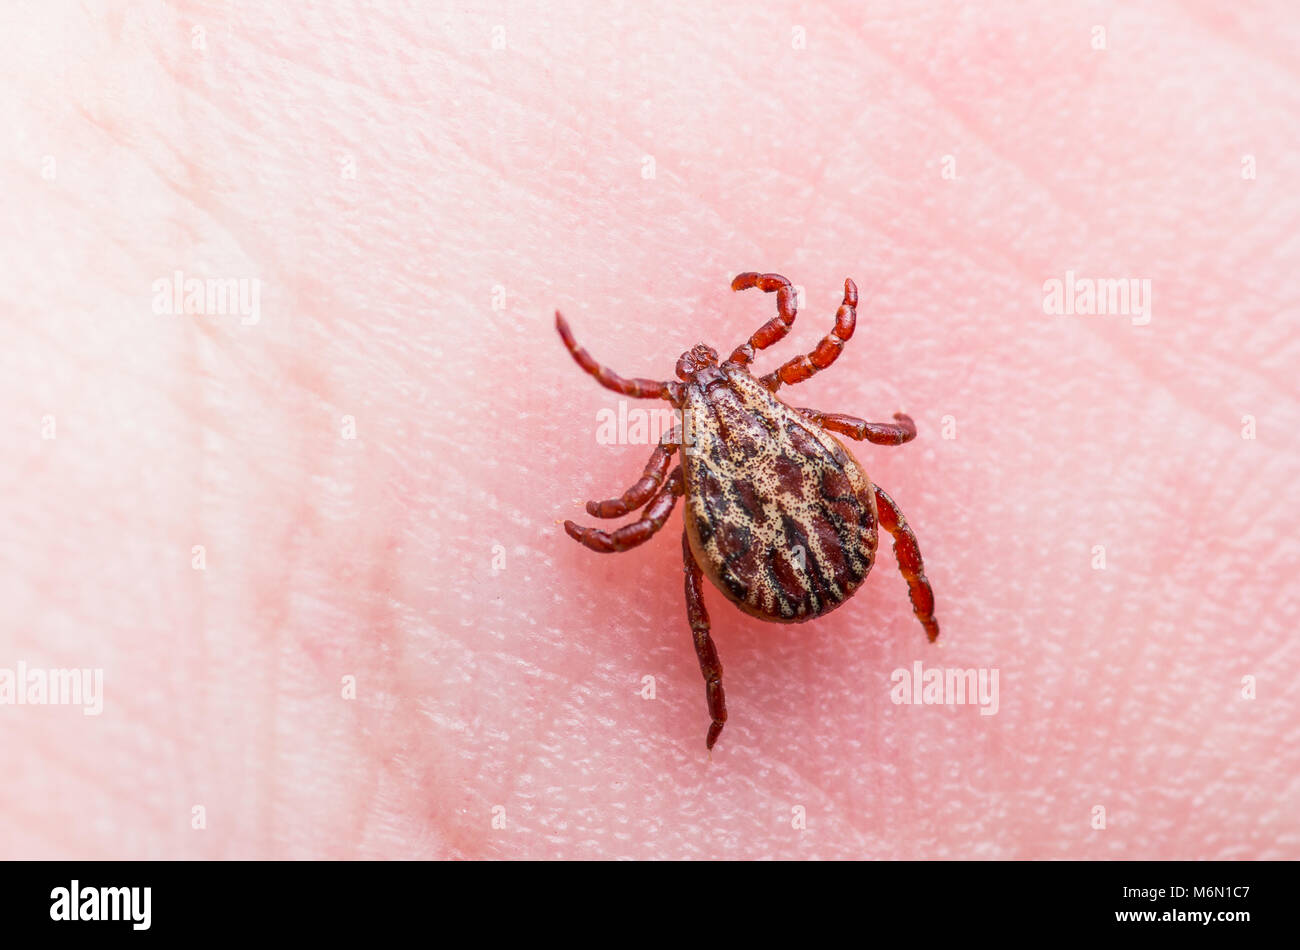 Encephalitis Virus or Lyme Disease Infected Tick Arachnid Insect on Skin Stock Photo